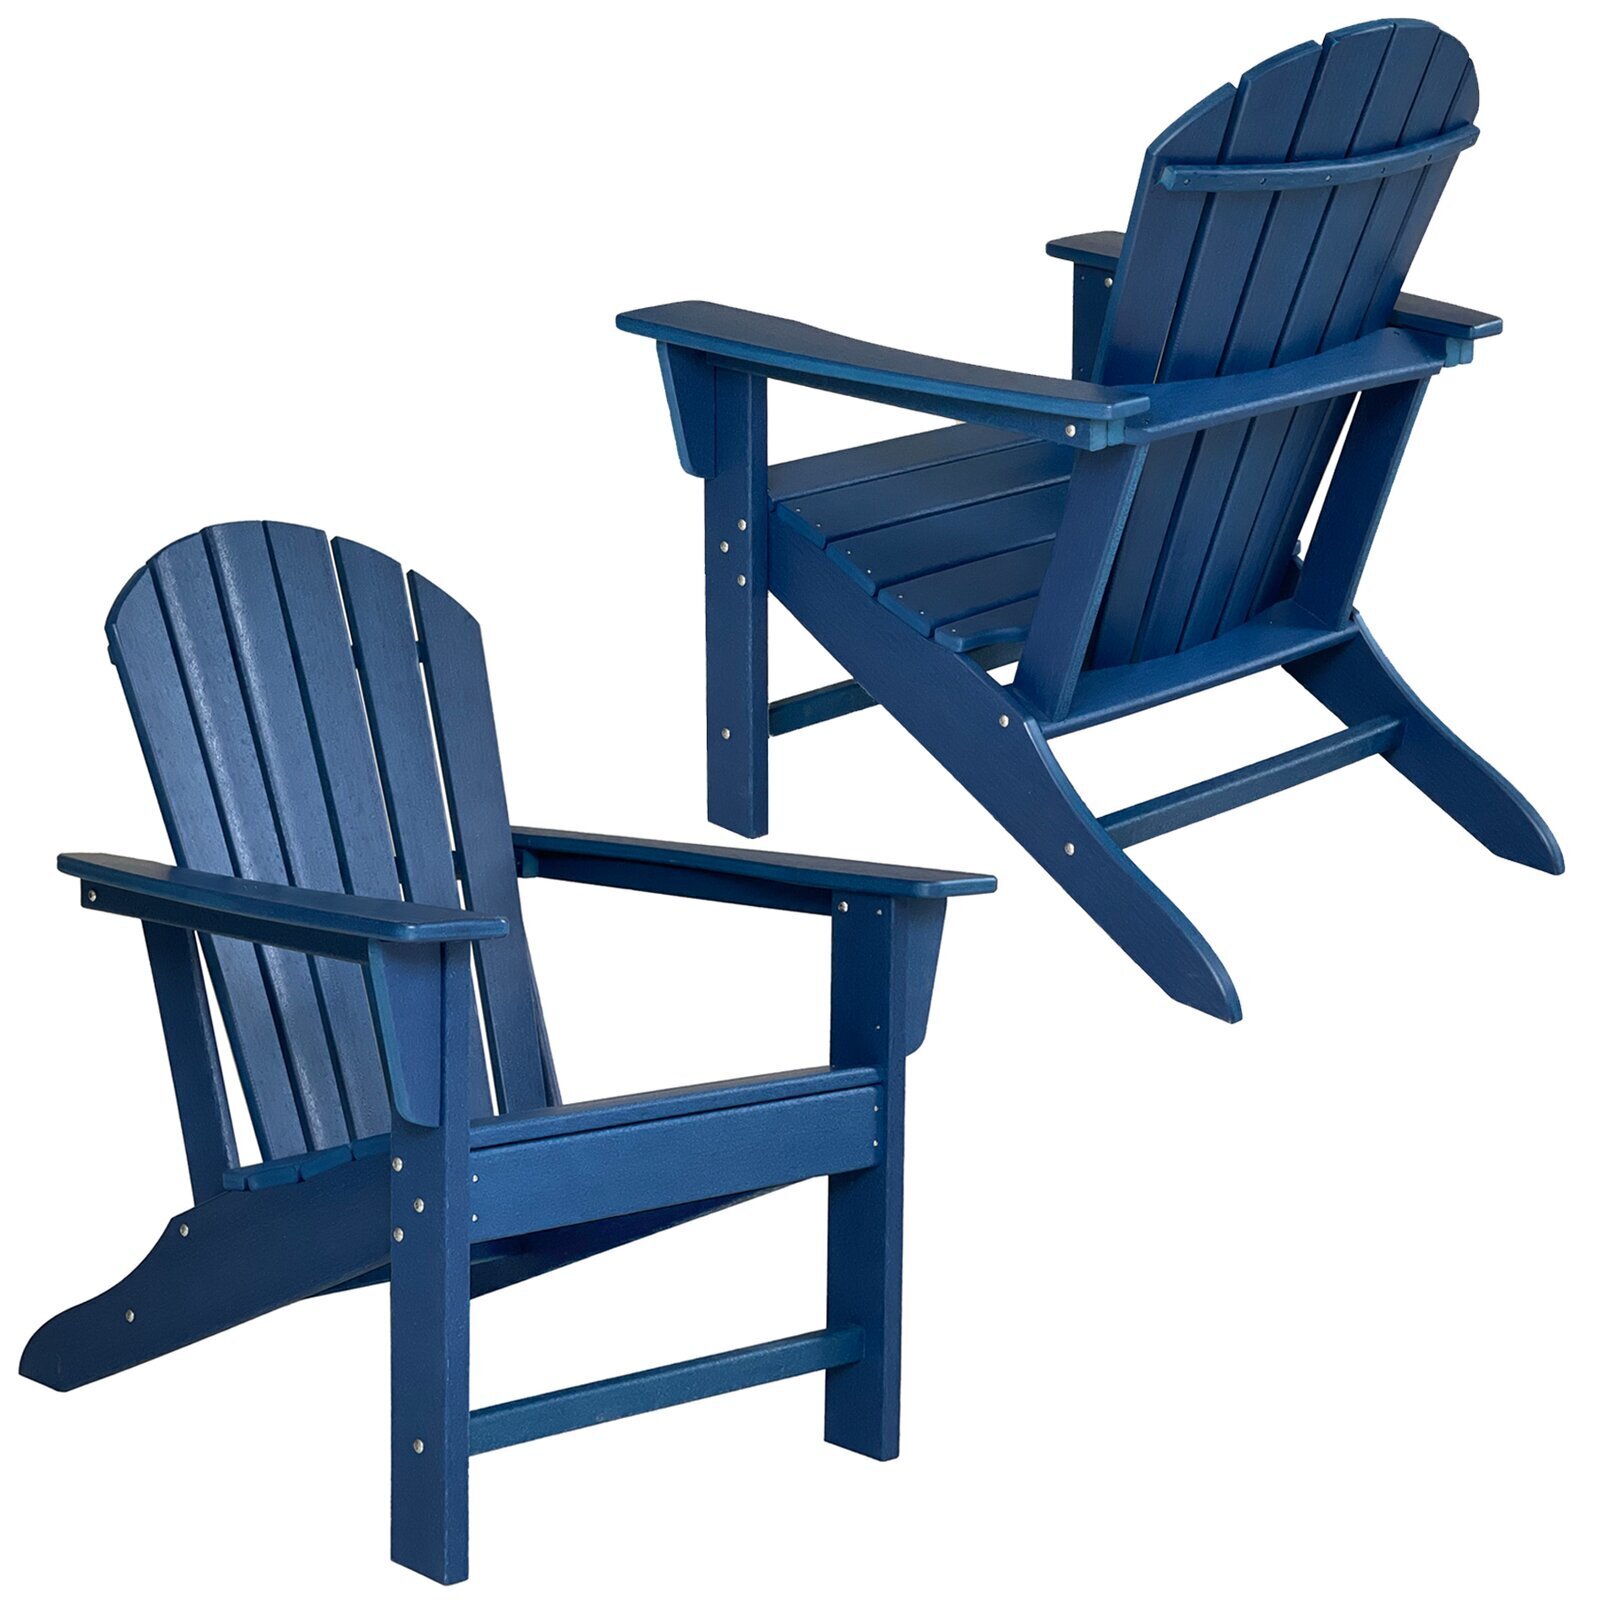 Set of 2 Plastic Adirondack Chairs